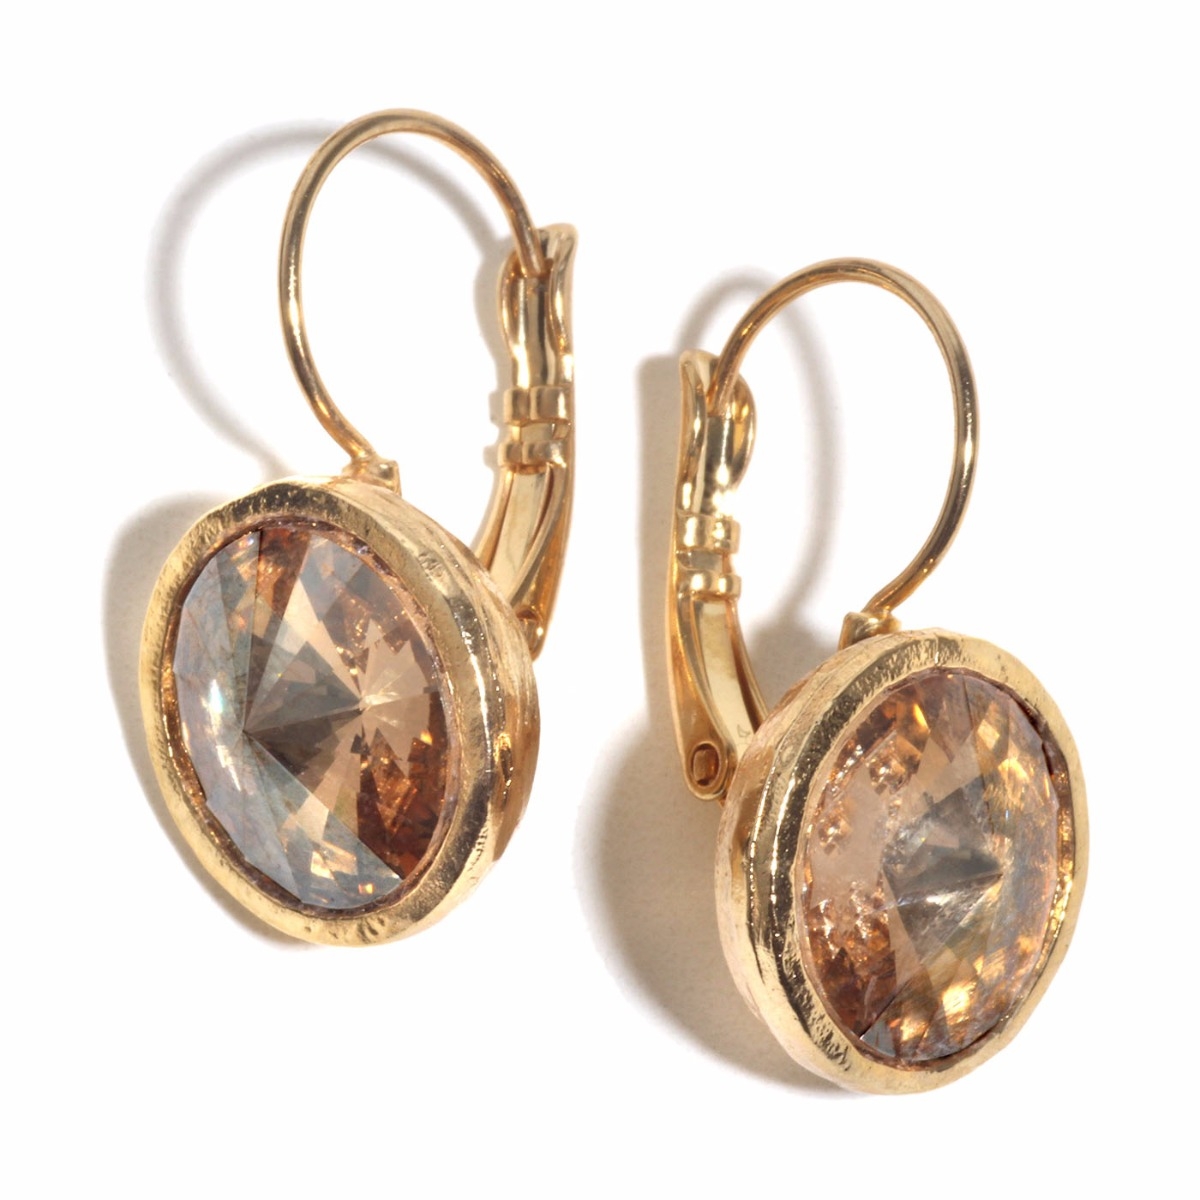 SEA Smadar Eliasaf Gold Plated Swarovski Drop Earrings – Champagne Stone - 1